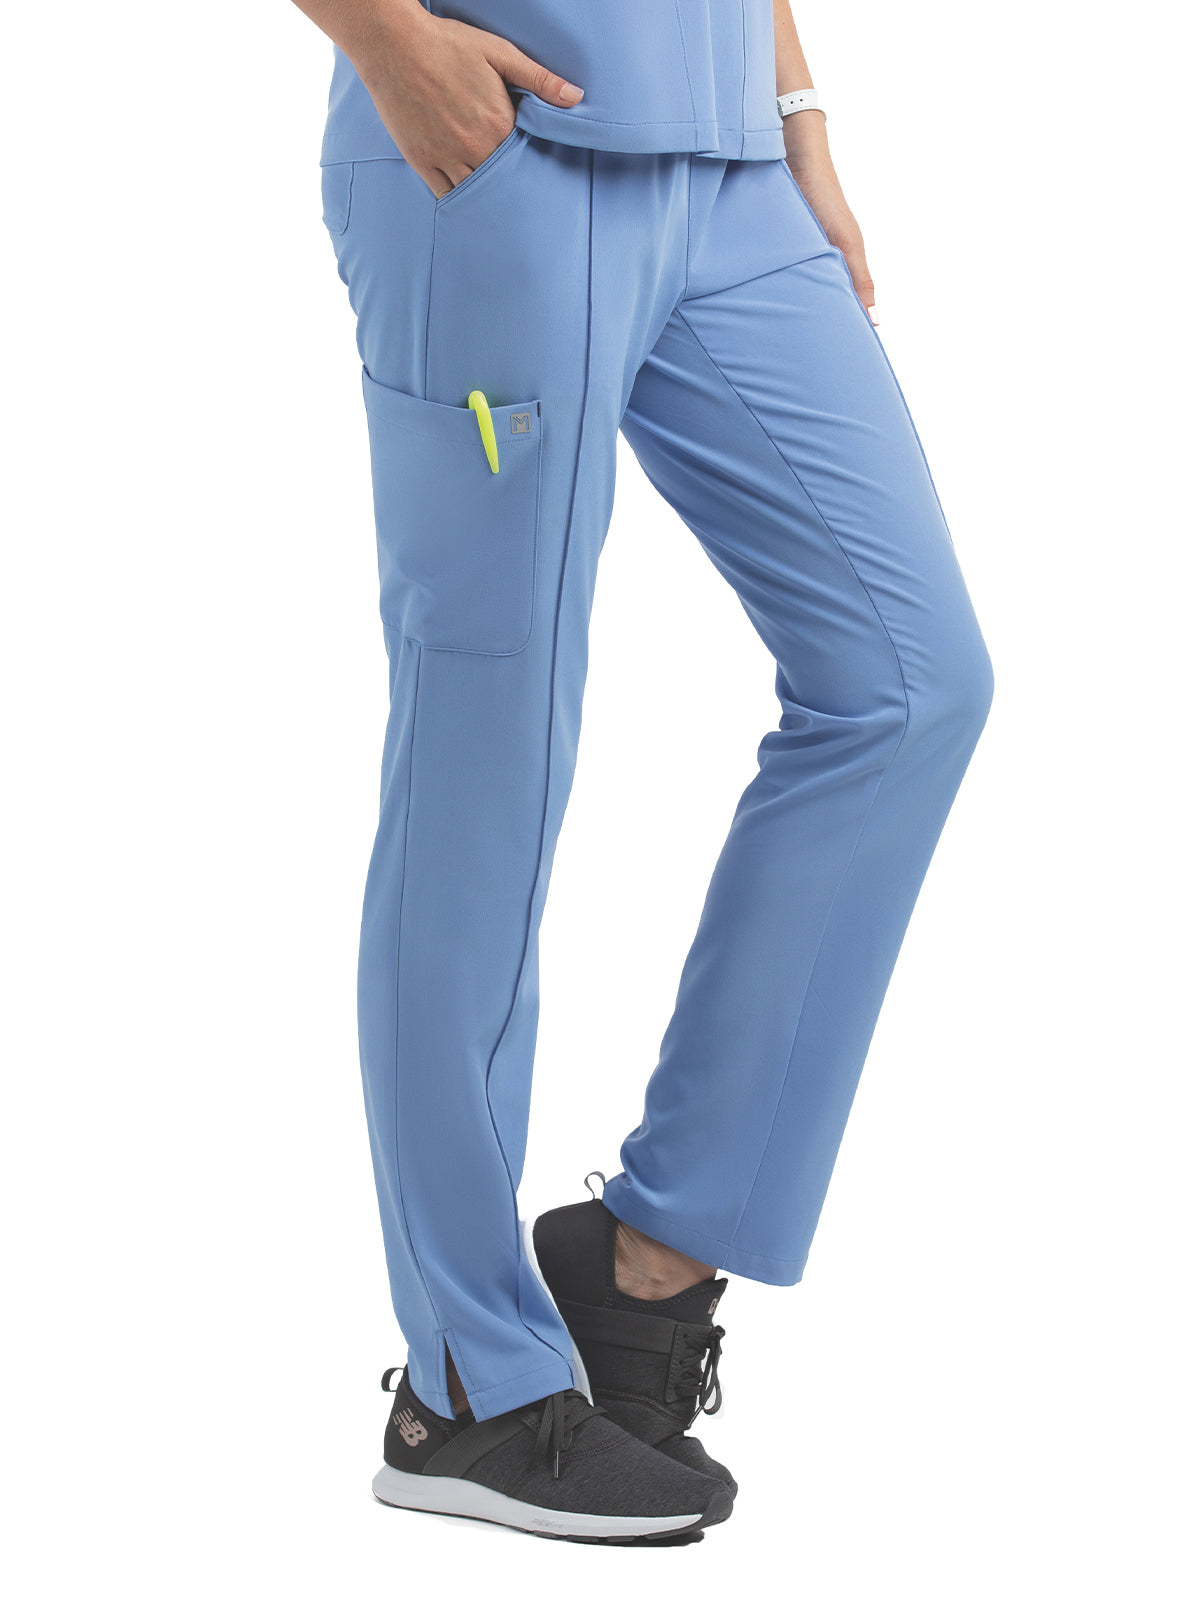 Women's Full Elastic Pant - 8510 - Ceil Blue